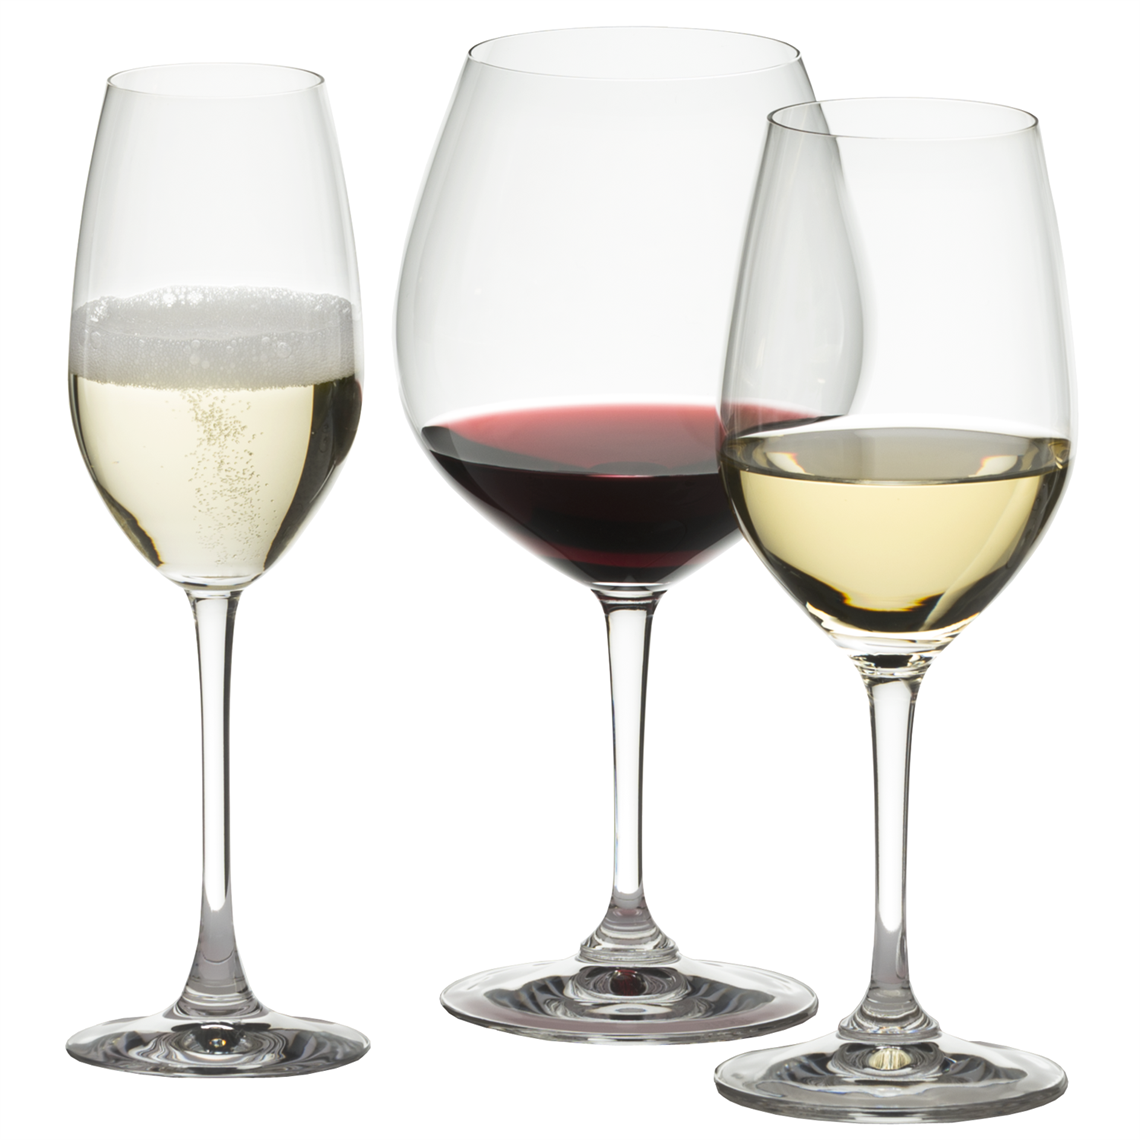 View more burgundy wine glasses from our Restaurant & Trade Glasses range